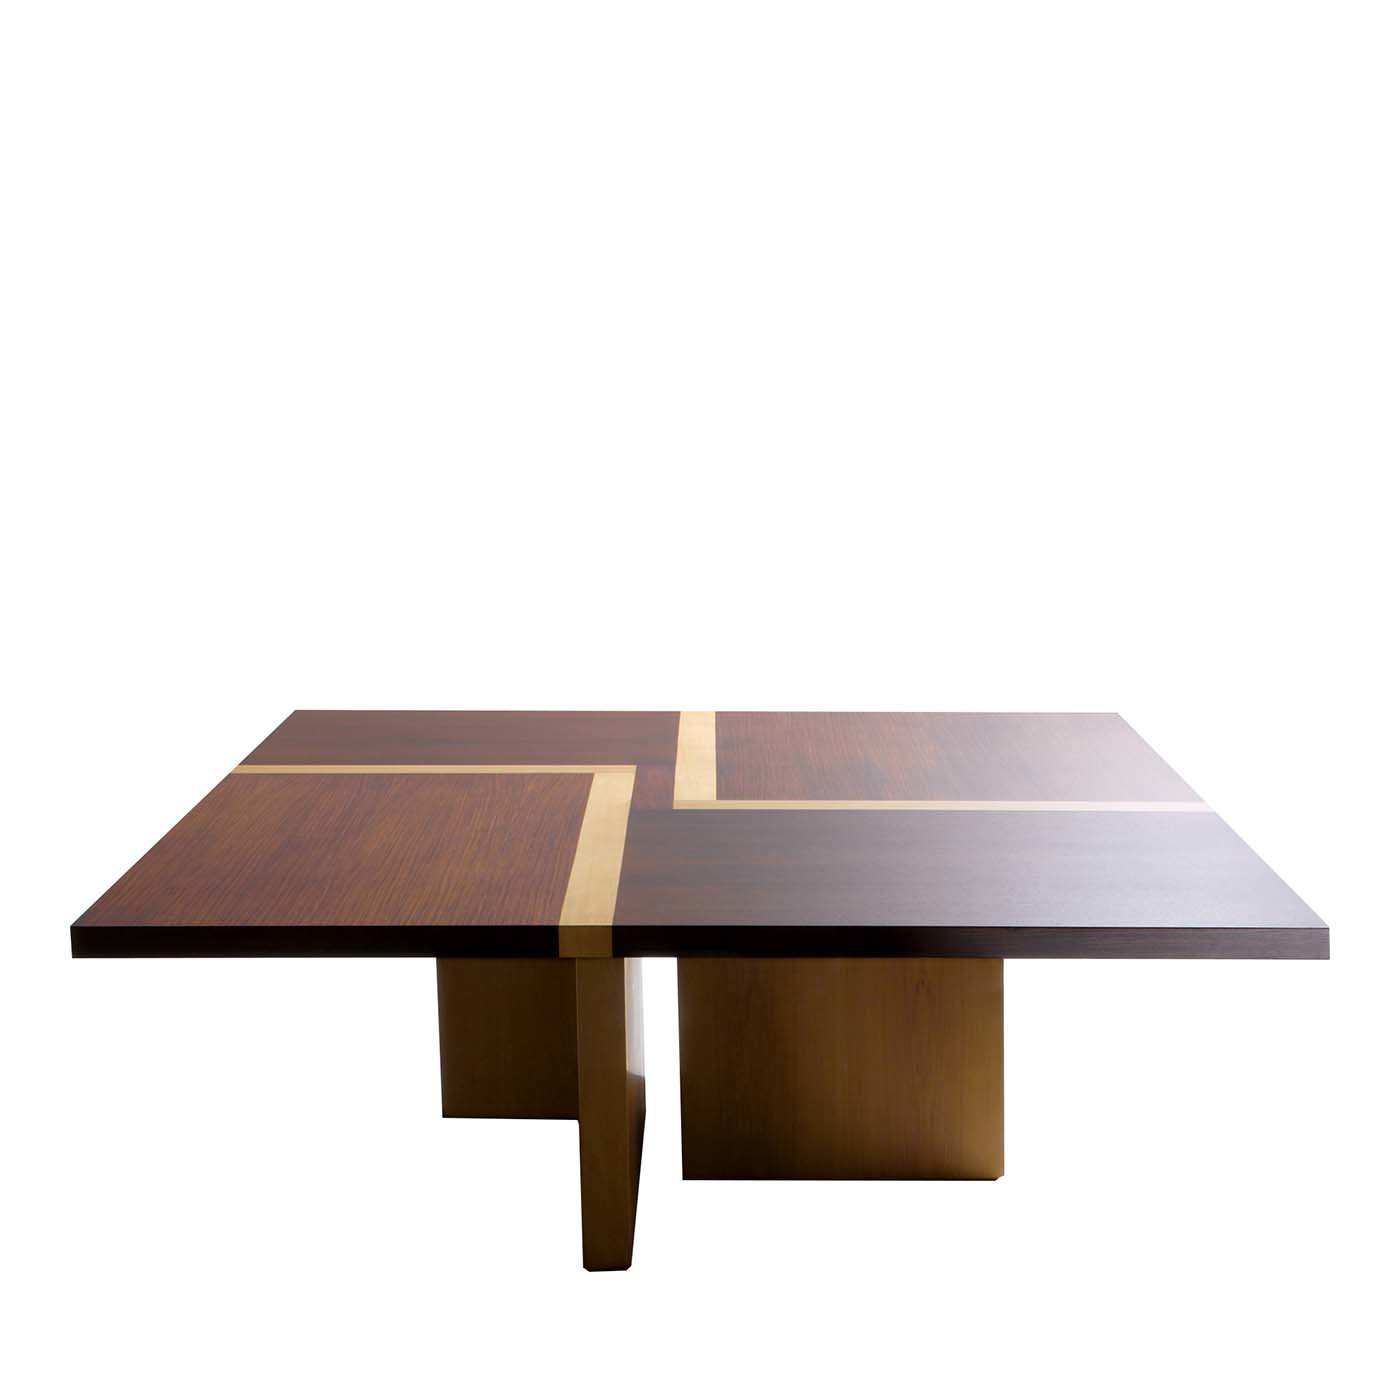 BD 07 Square Table by Bartoli Design - Main view